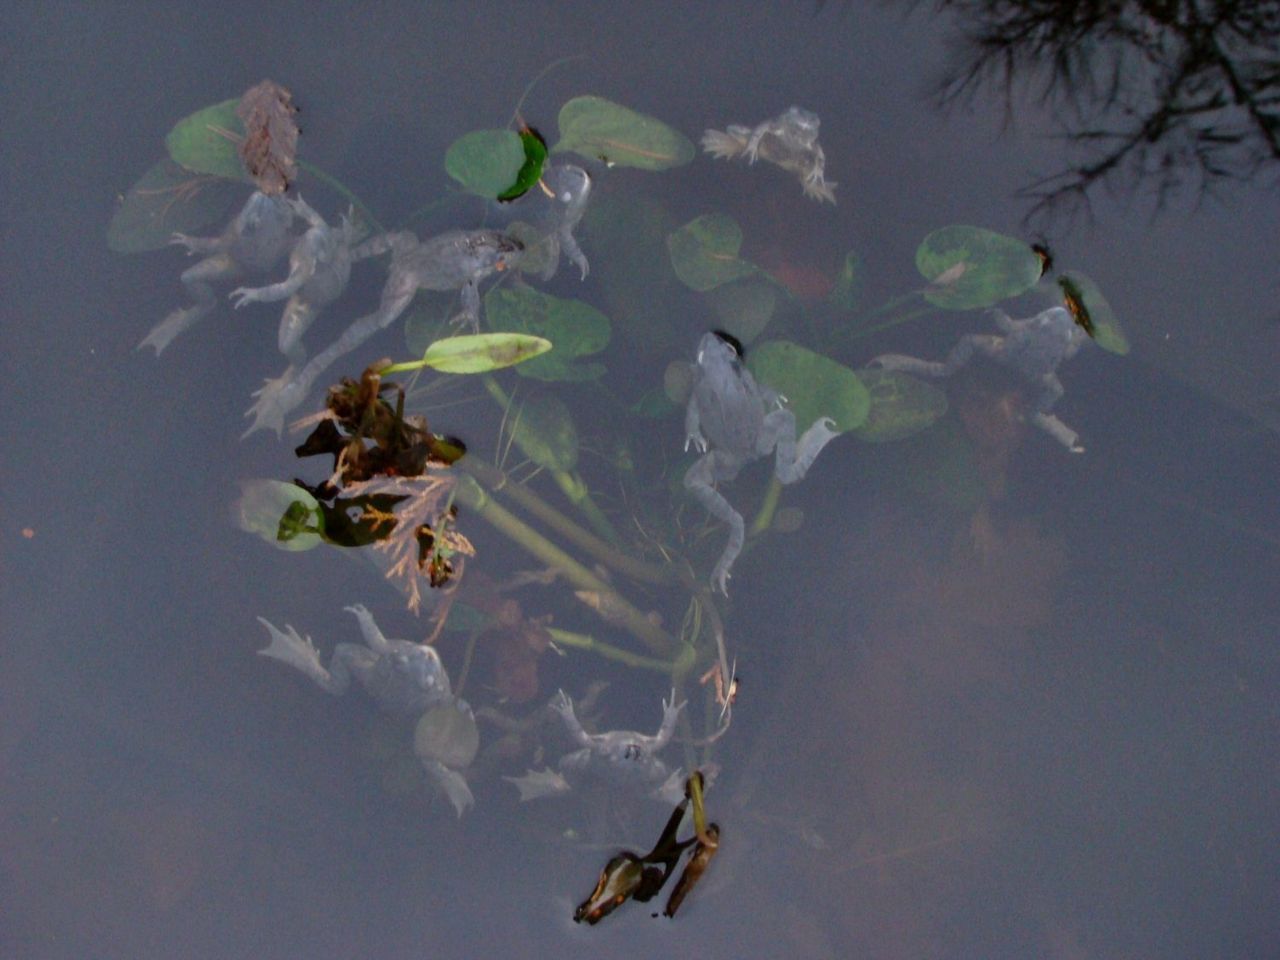 Opgeblazen bruine kikkers drijvend in de vijver (foto: Judith Bouma)